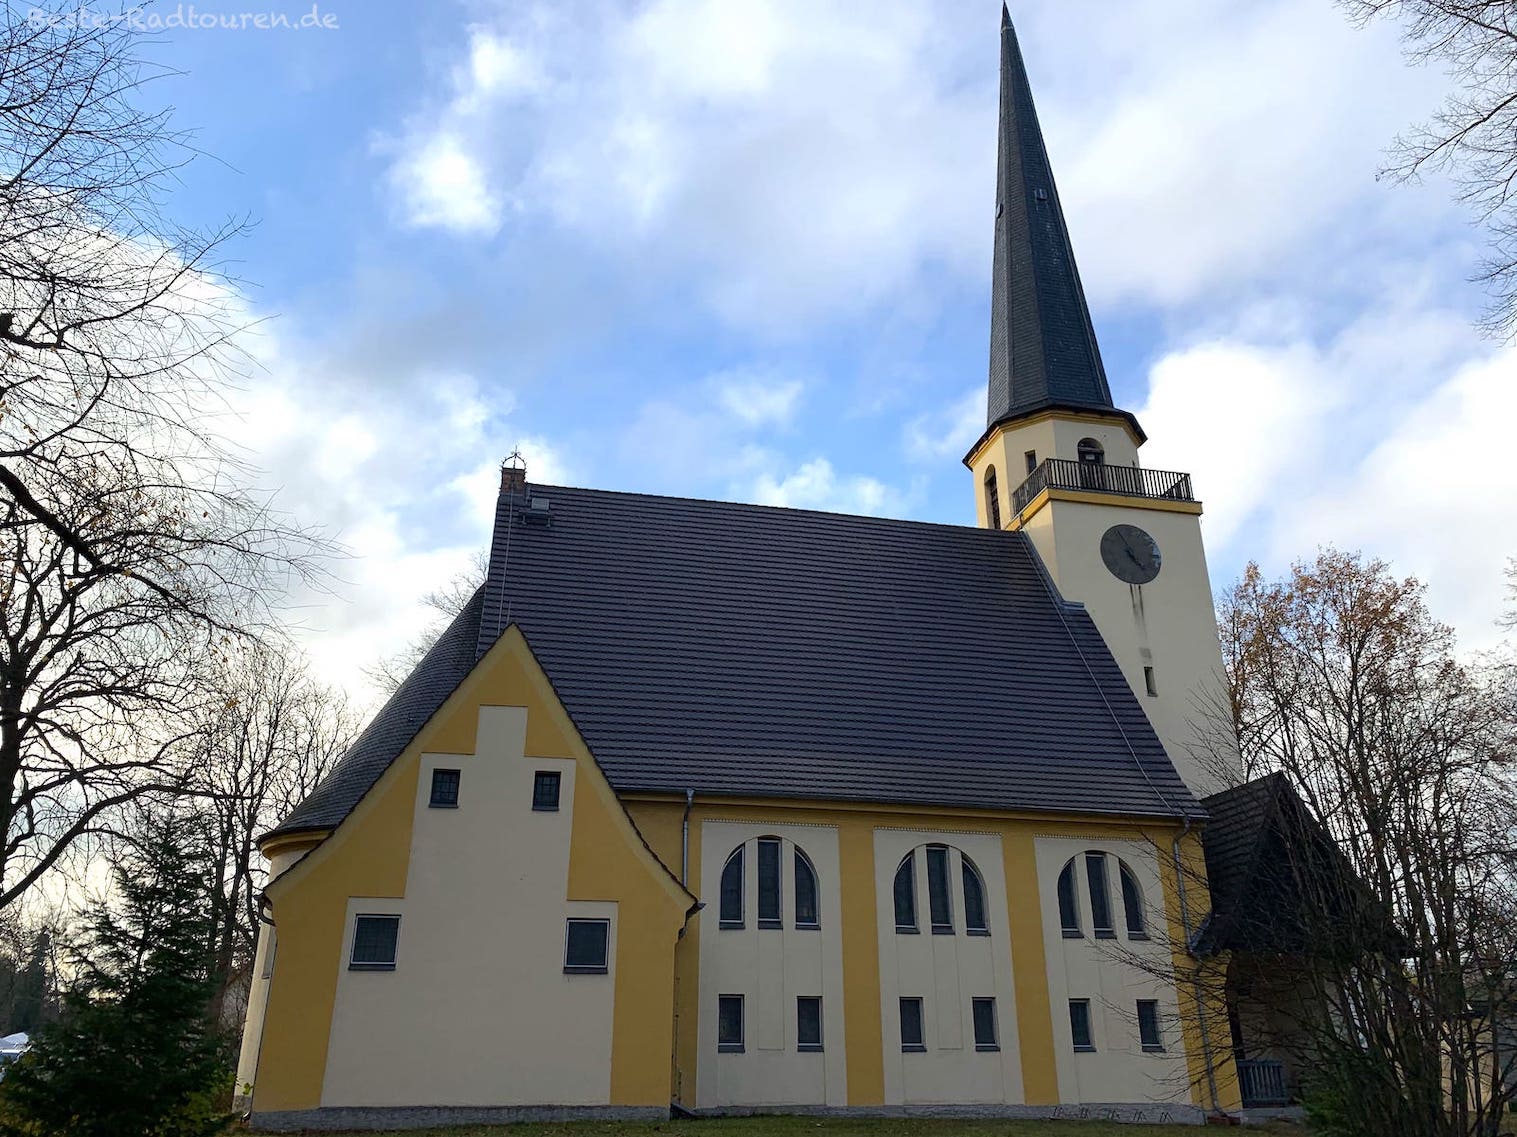 Foto vom Hofjagdweg aus: Dorfkirche bzw. Christuskirche Groß Köris